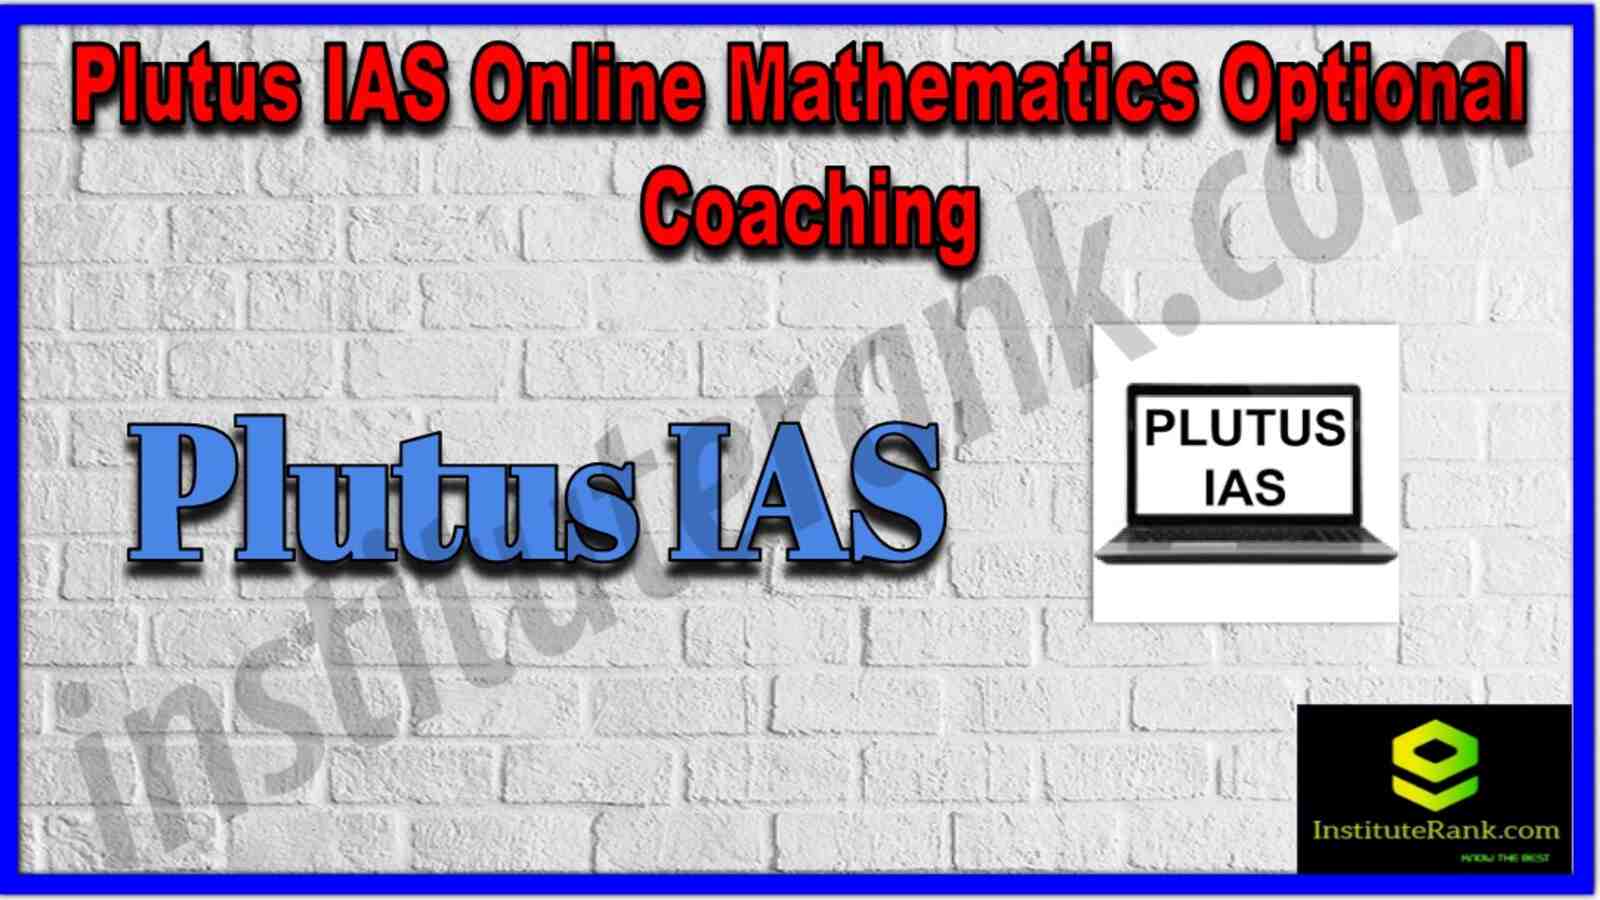 Plutus IAS Online Mathematics Optional Coaching